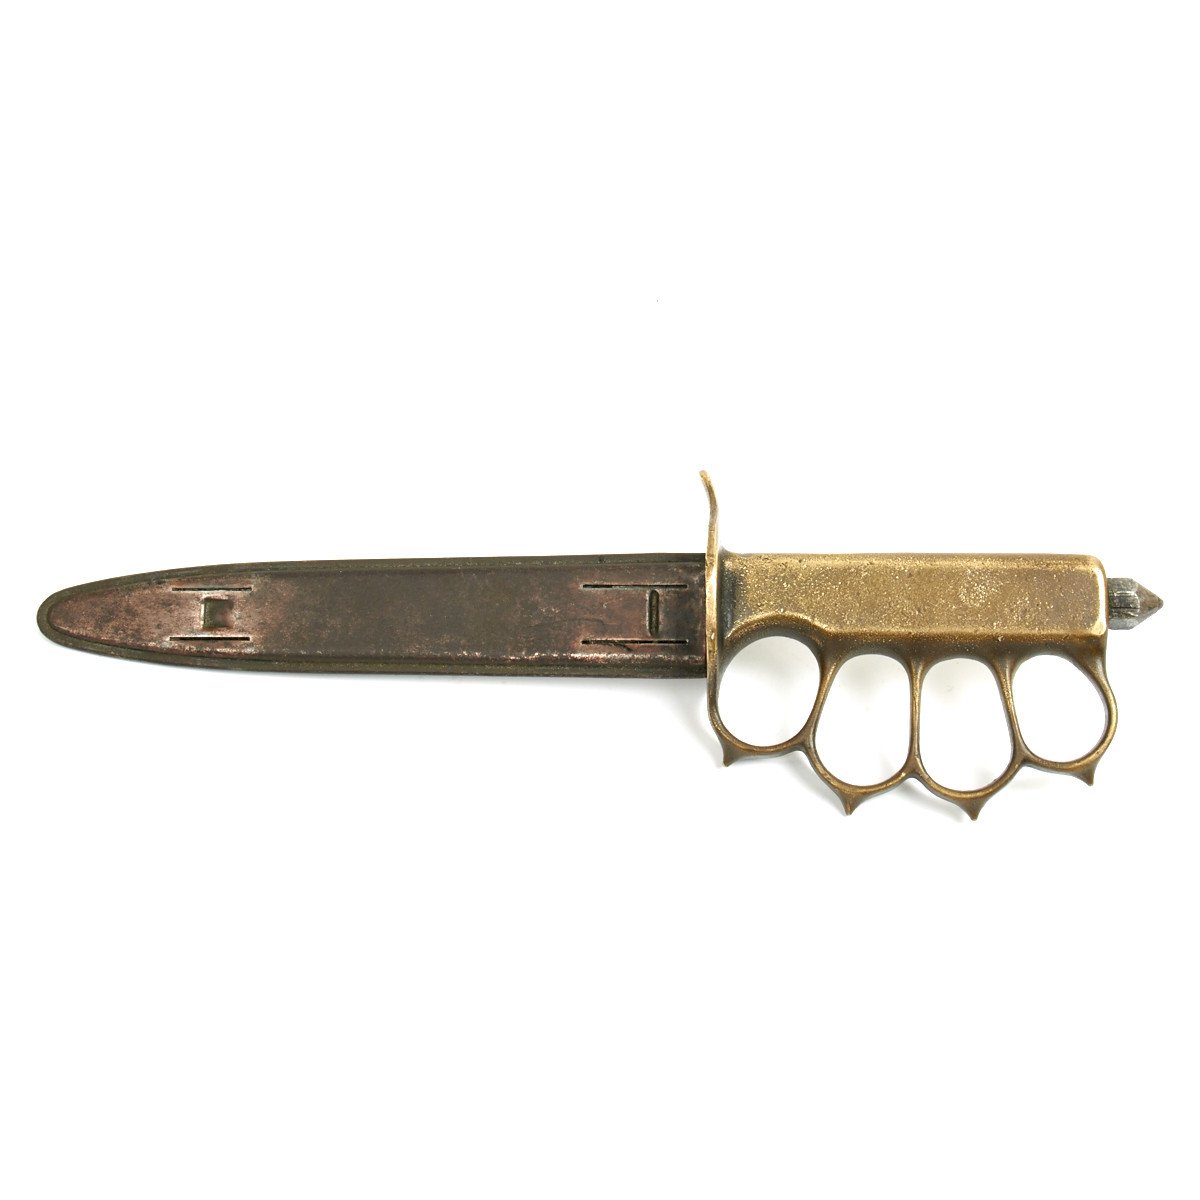 U.S. 1918 Brass Knuckle Trench Knife-2F2-SI17858